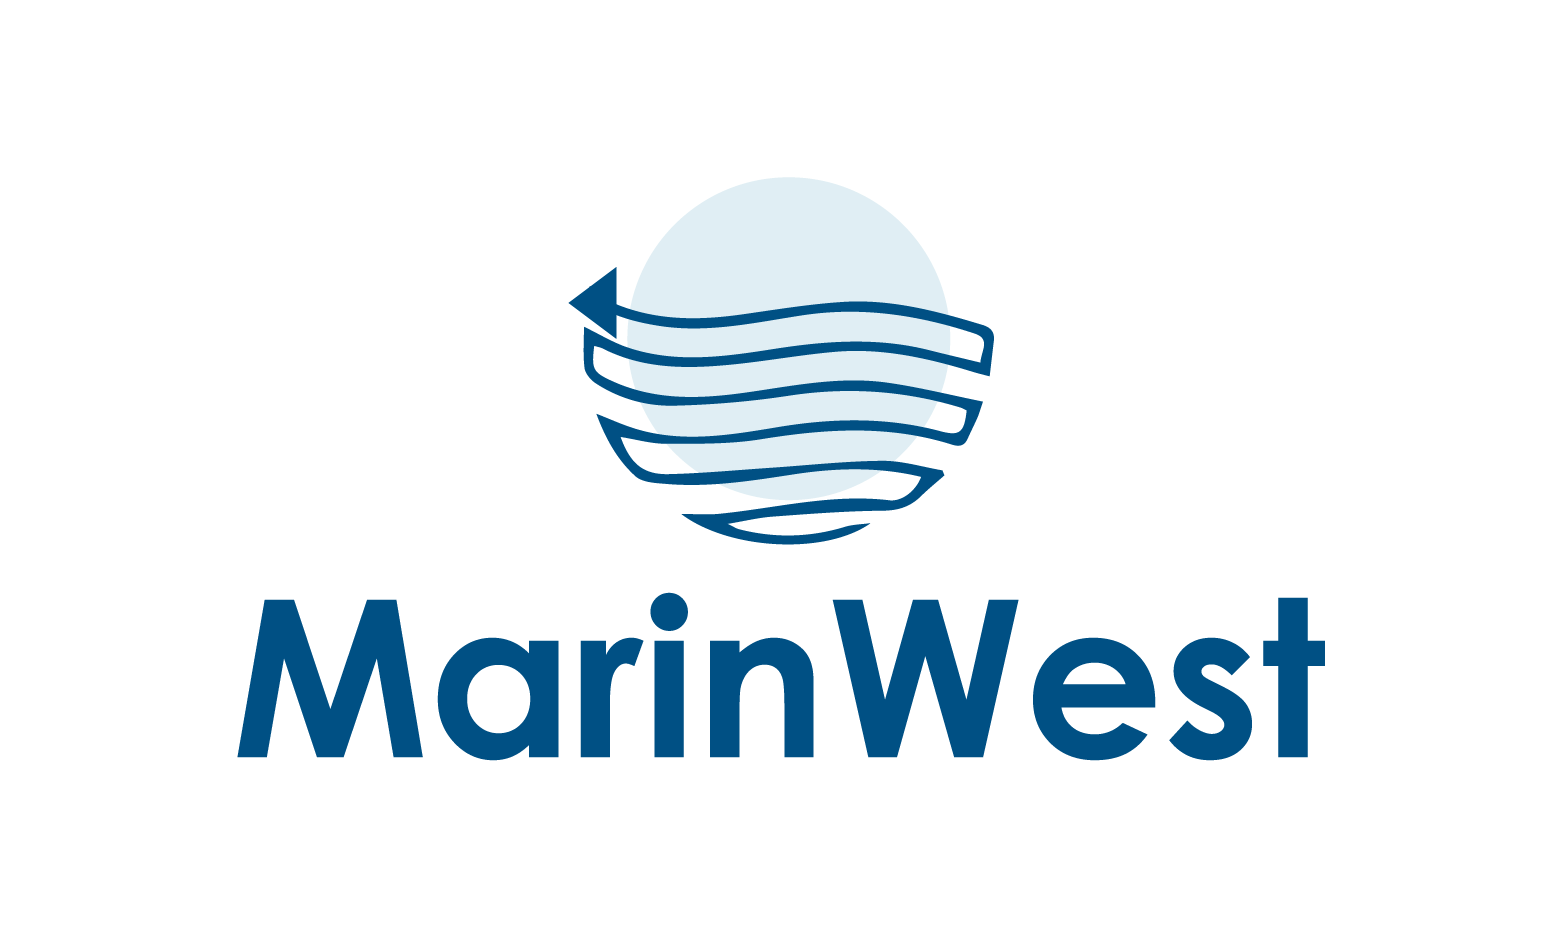 MarinWest.com - Creative brandable domain for sale